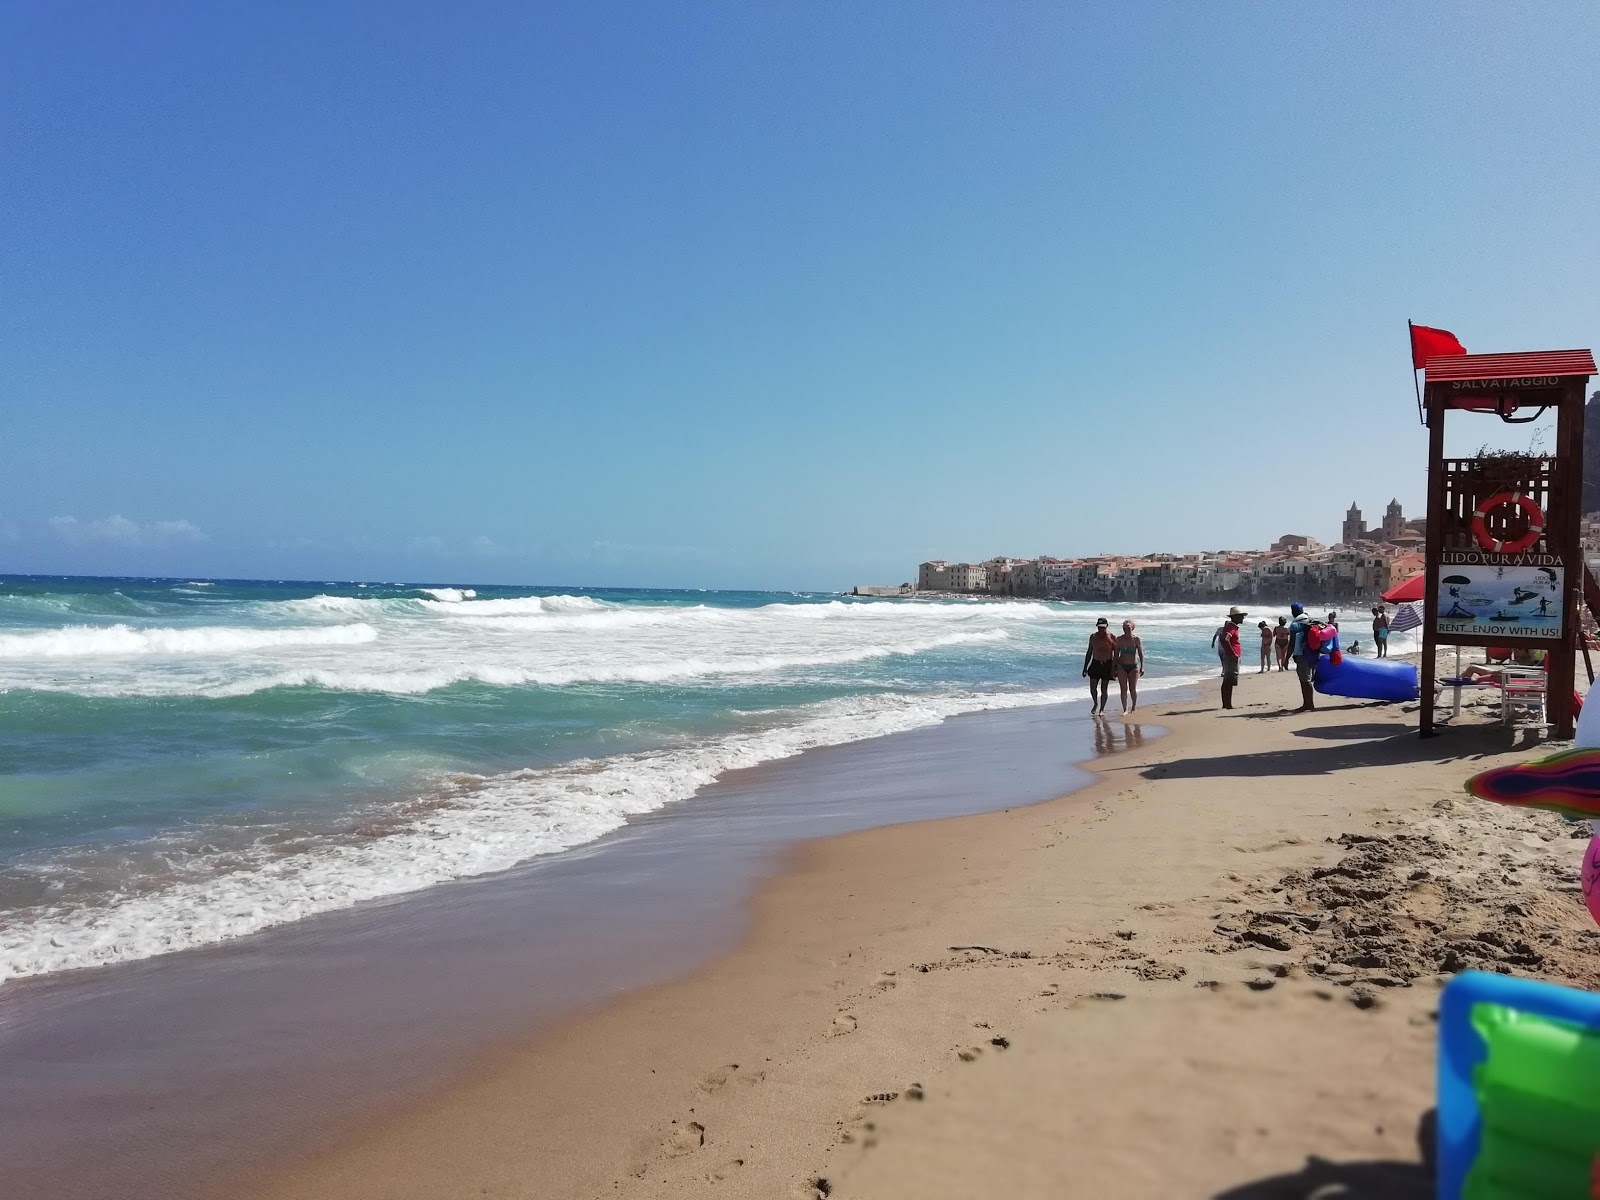 Foto de Praia de Cefalù - lugar popular entre os apreciadores de relaxamento